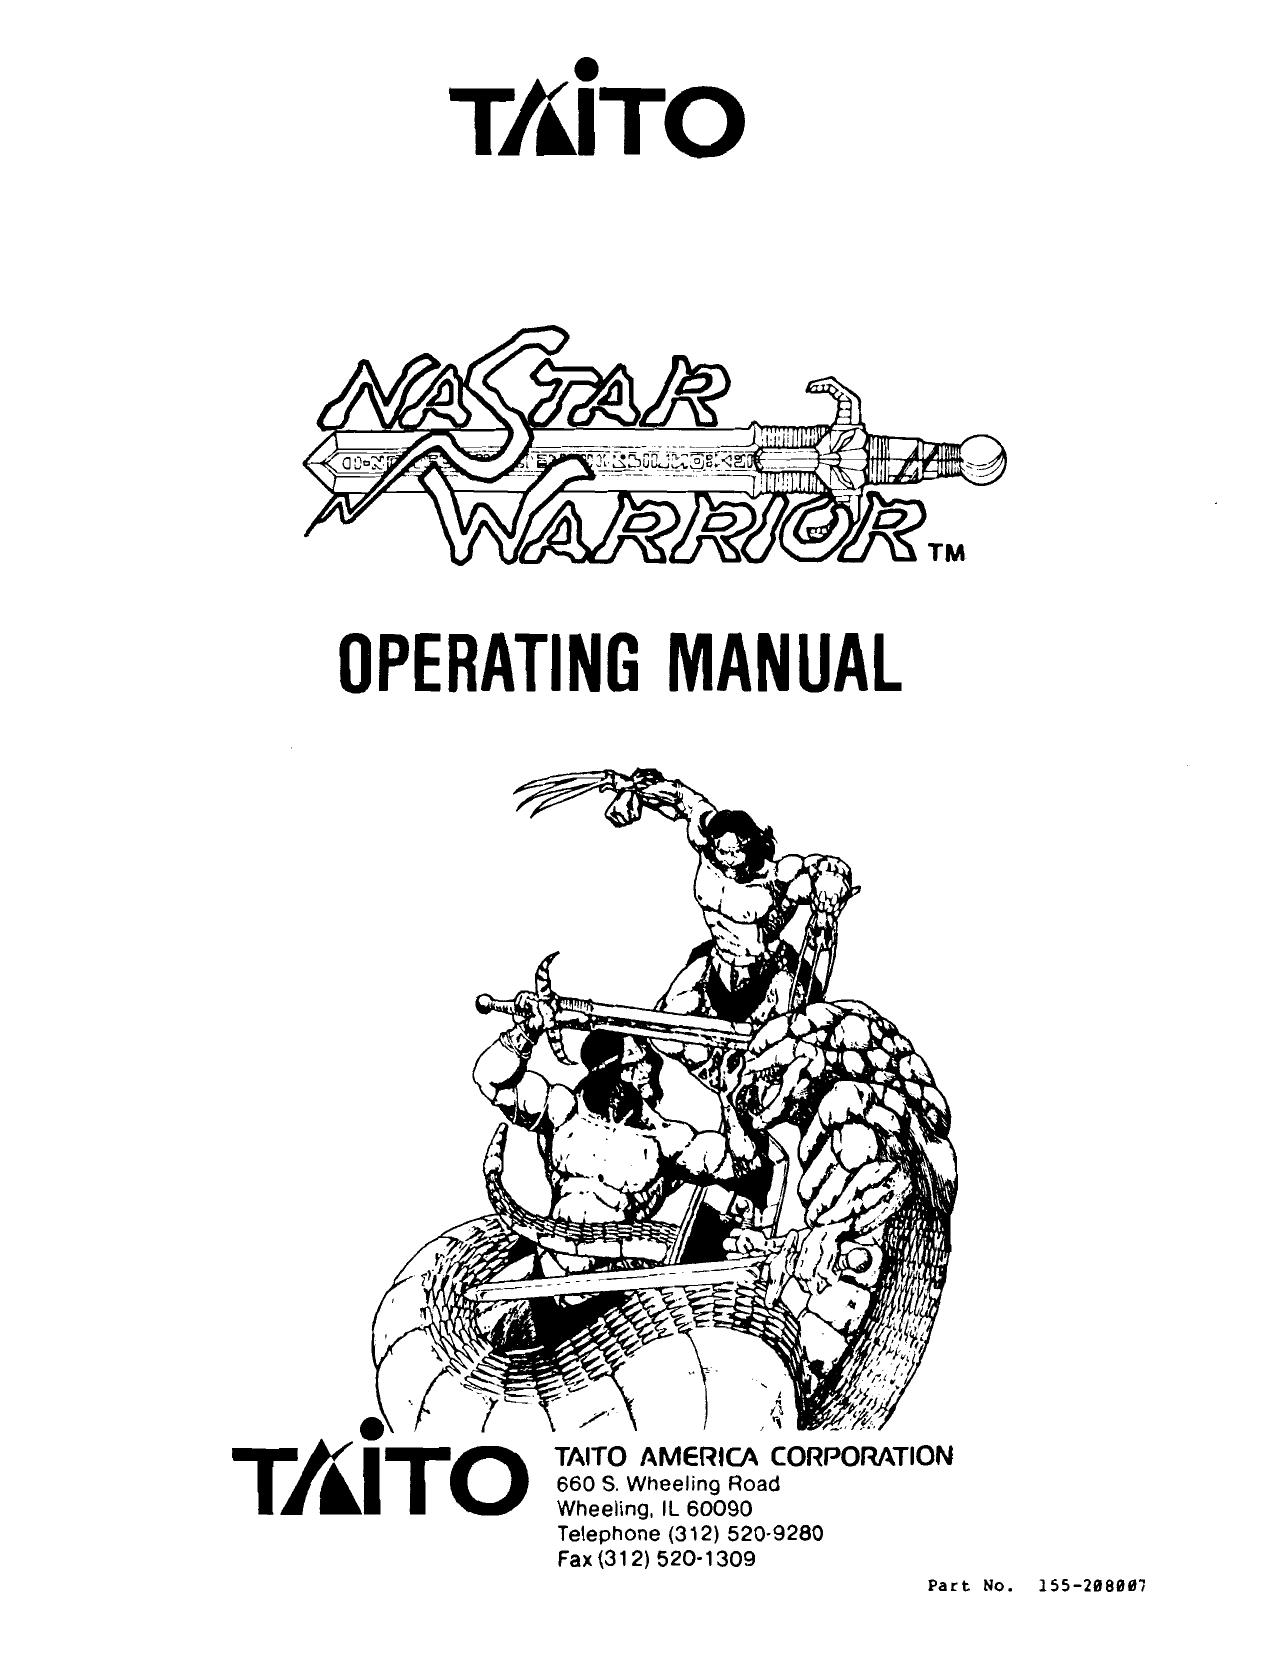 Nastar Warrior Operating Manual